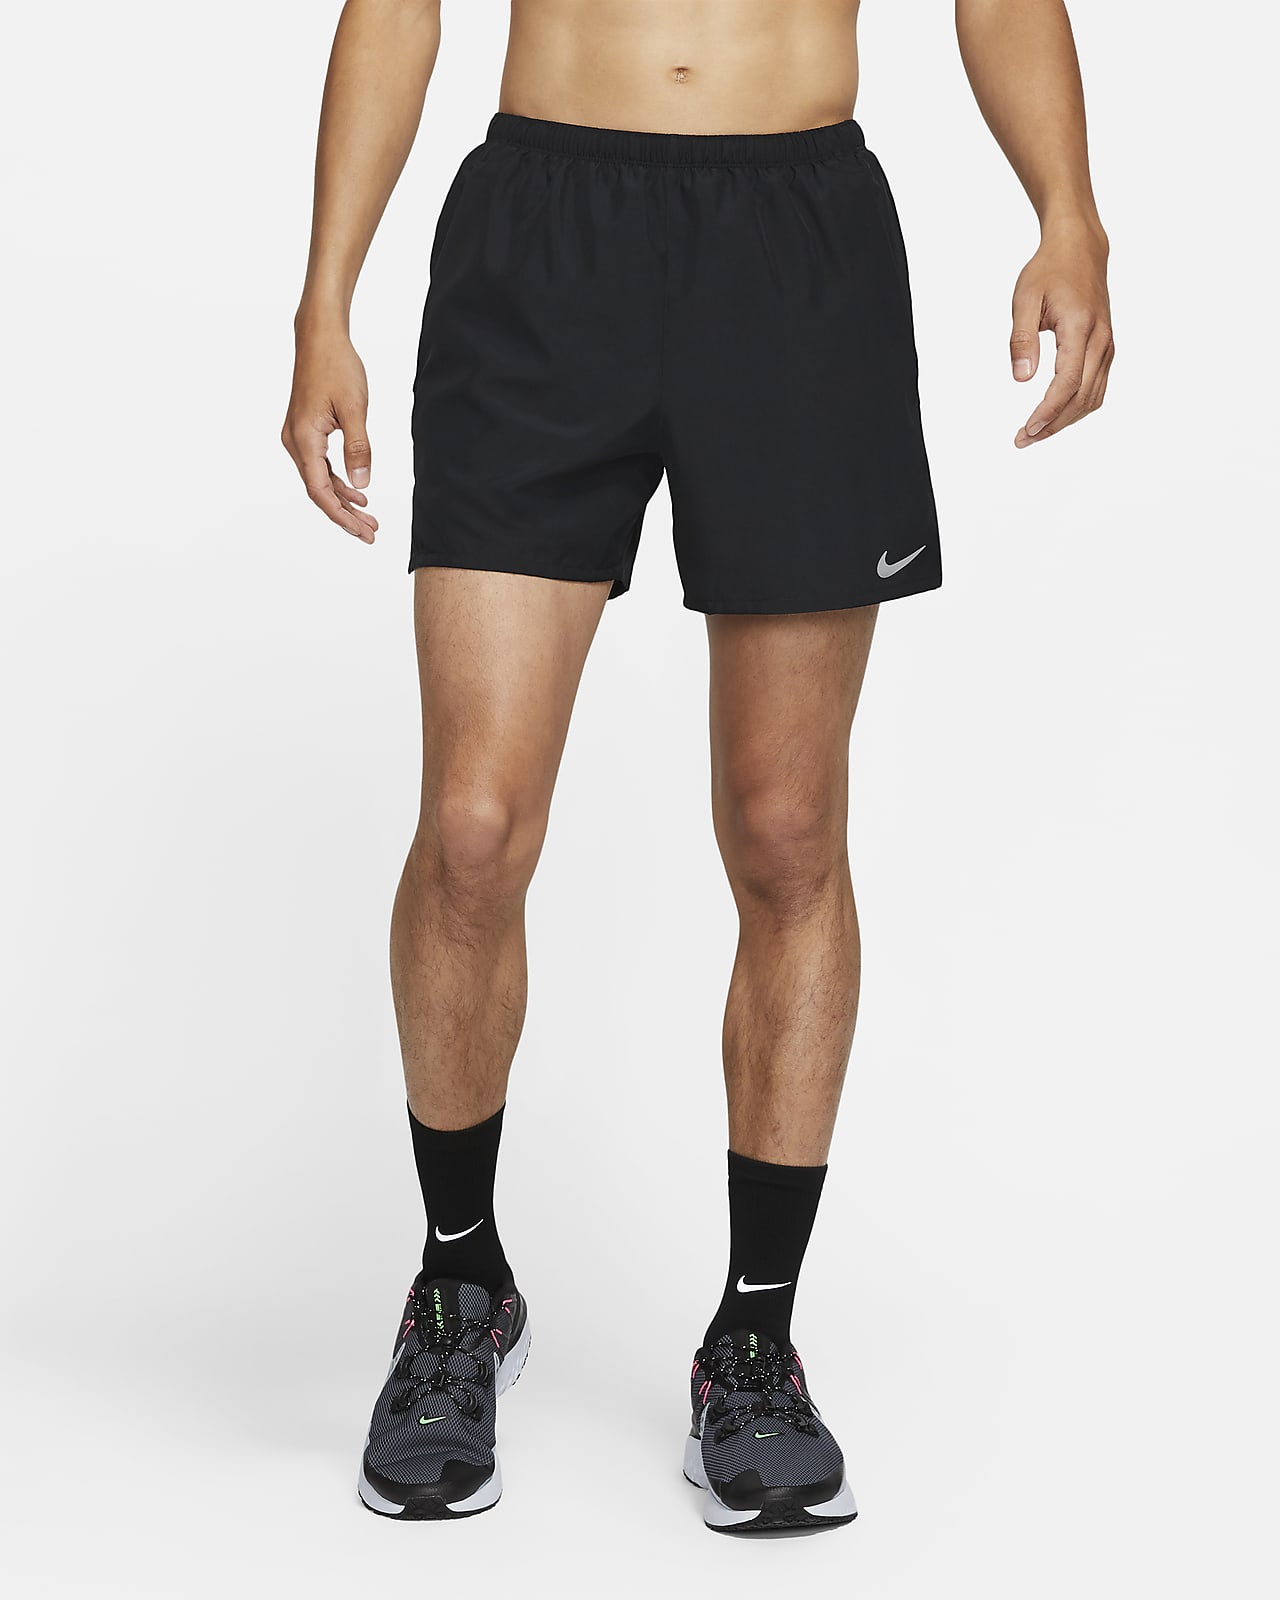 nike challenger running shorts